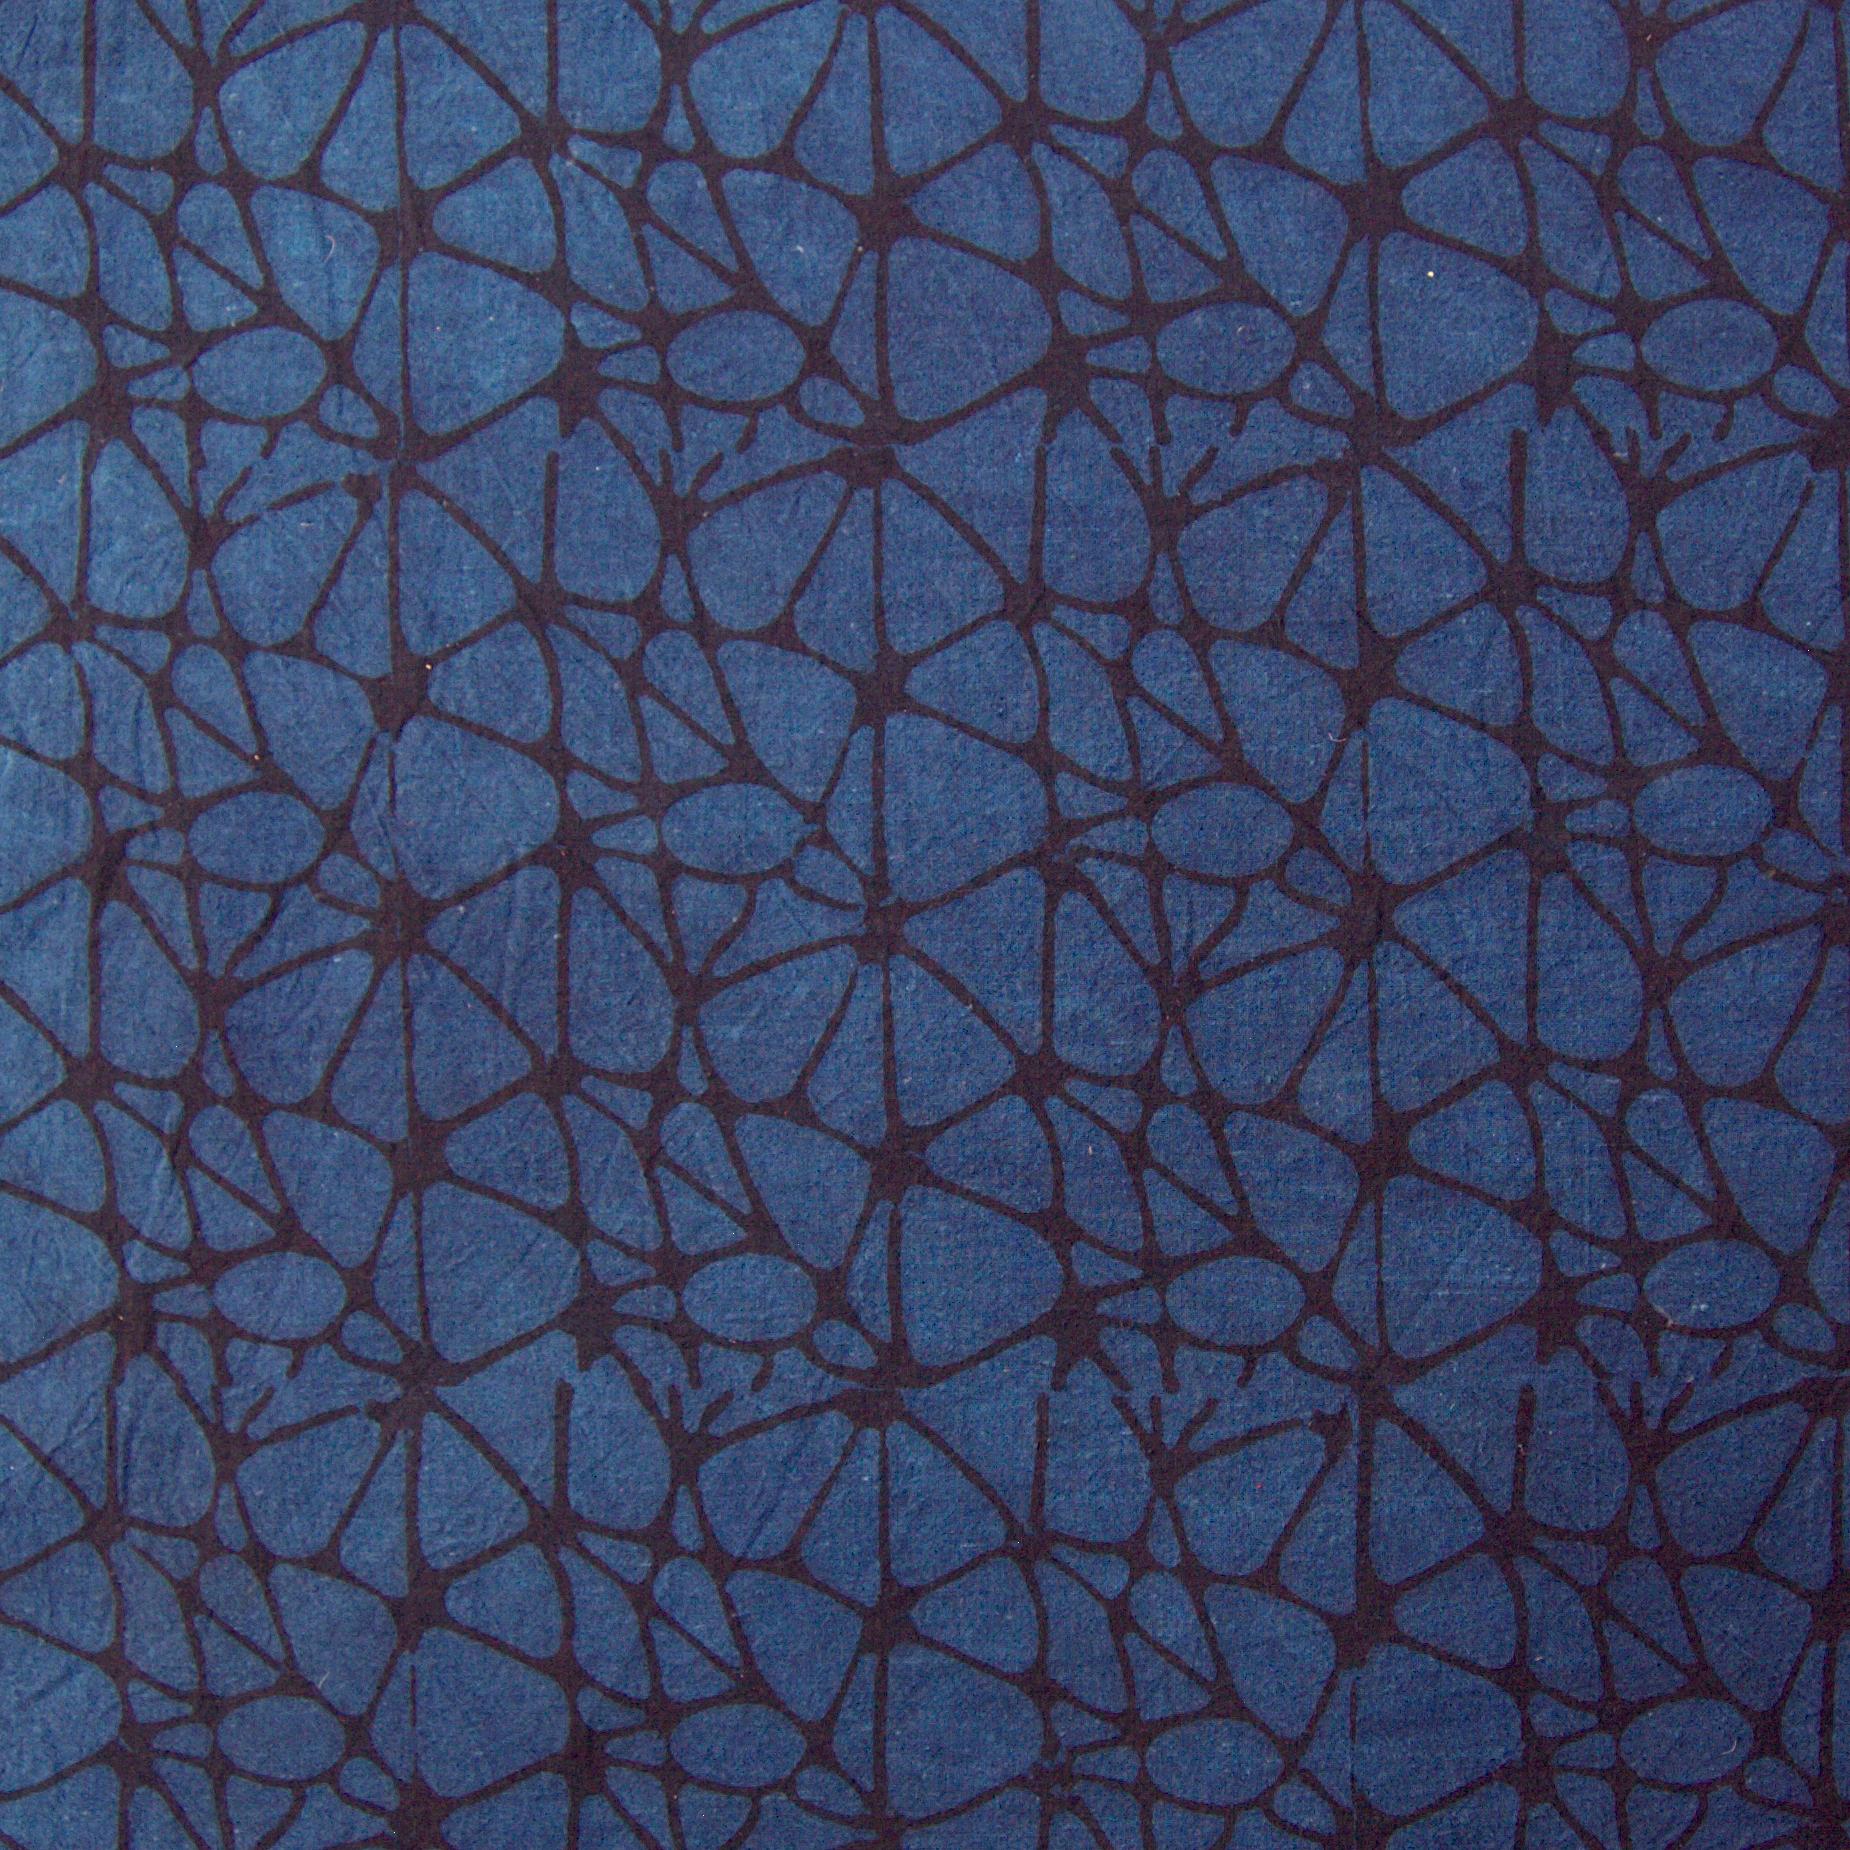 100% Block-Printed Cotton Fabric From India- Ajrak - Indigo Black Constellation Print